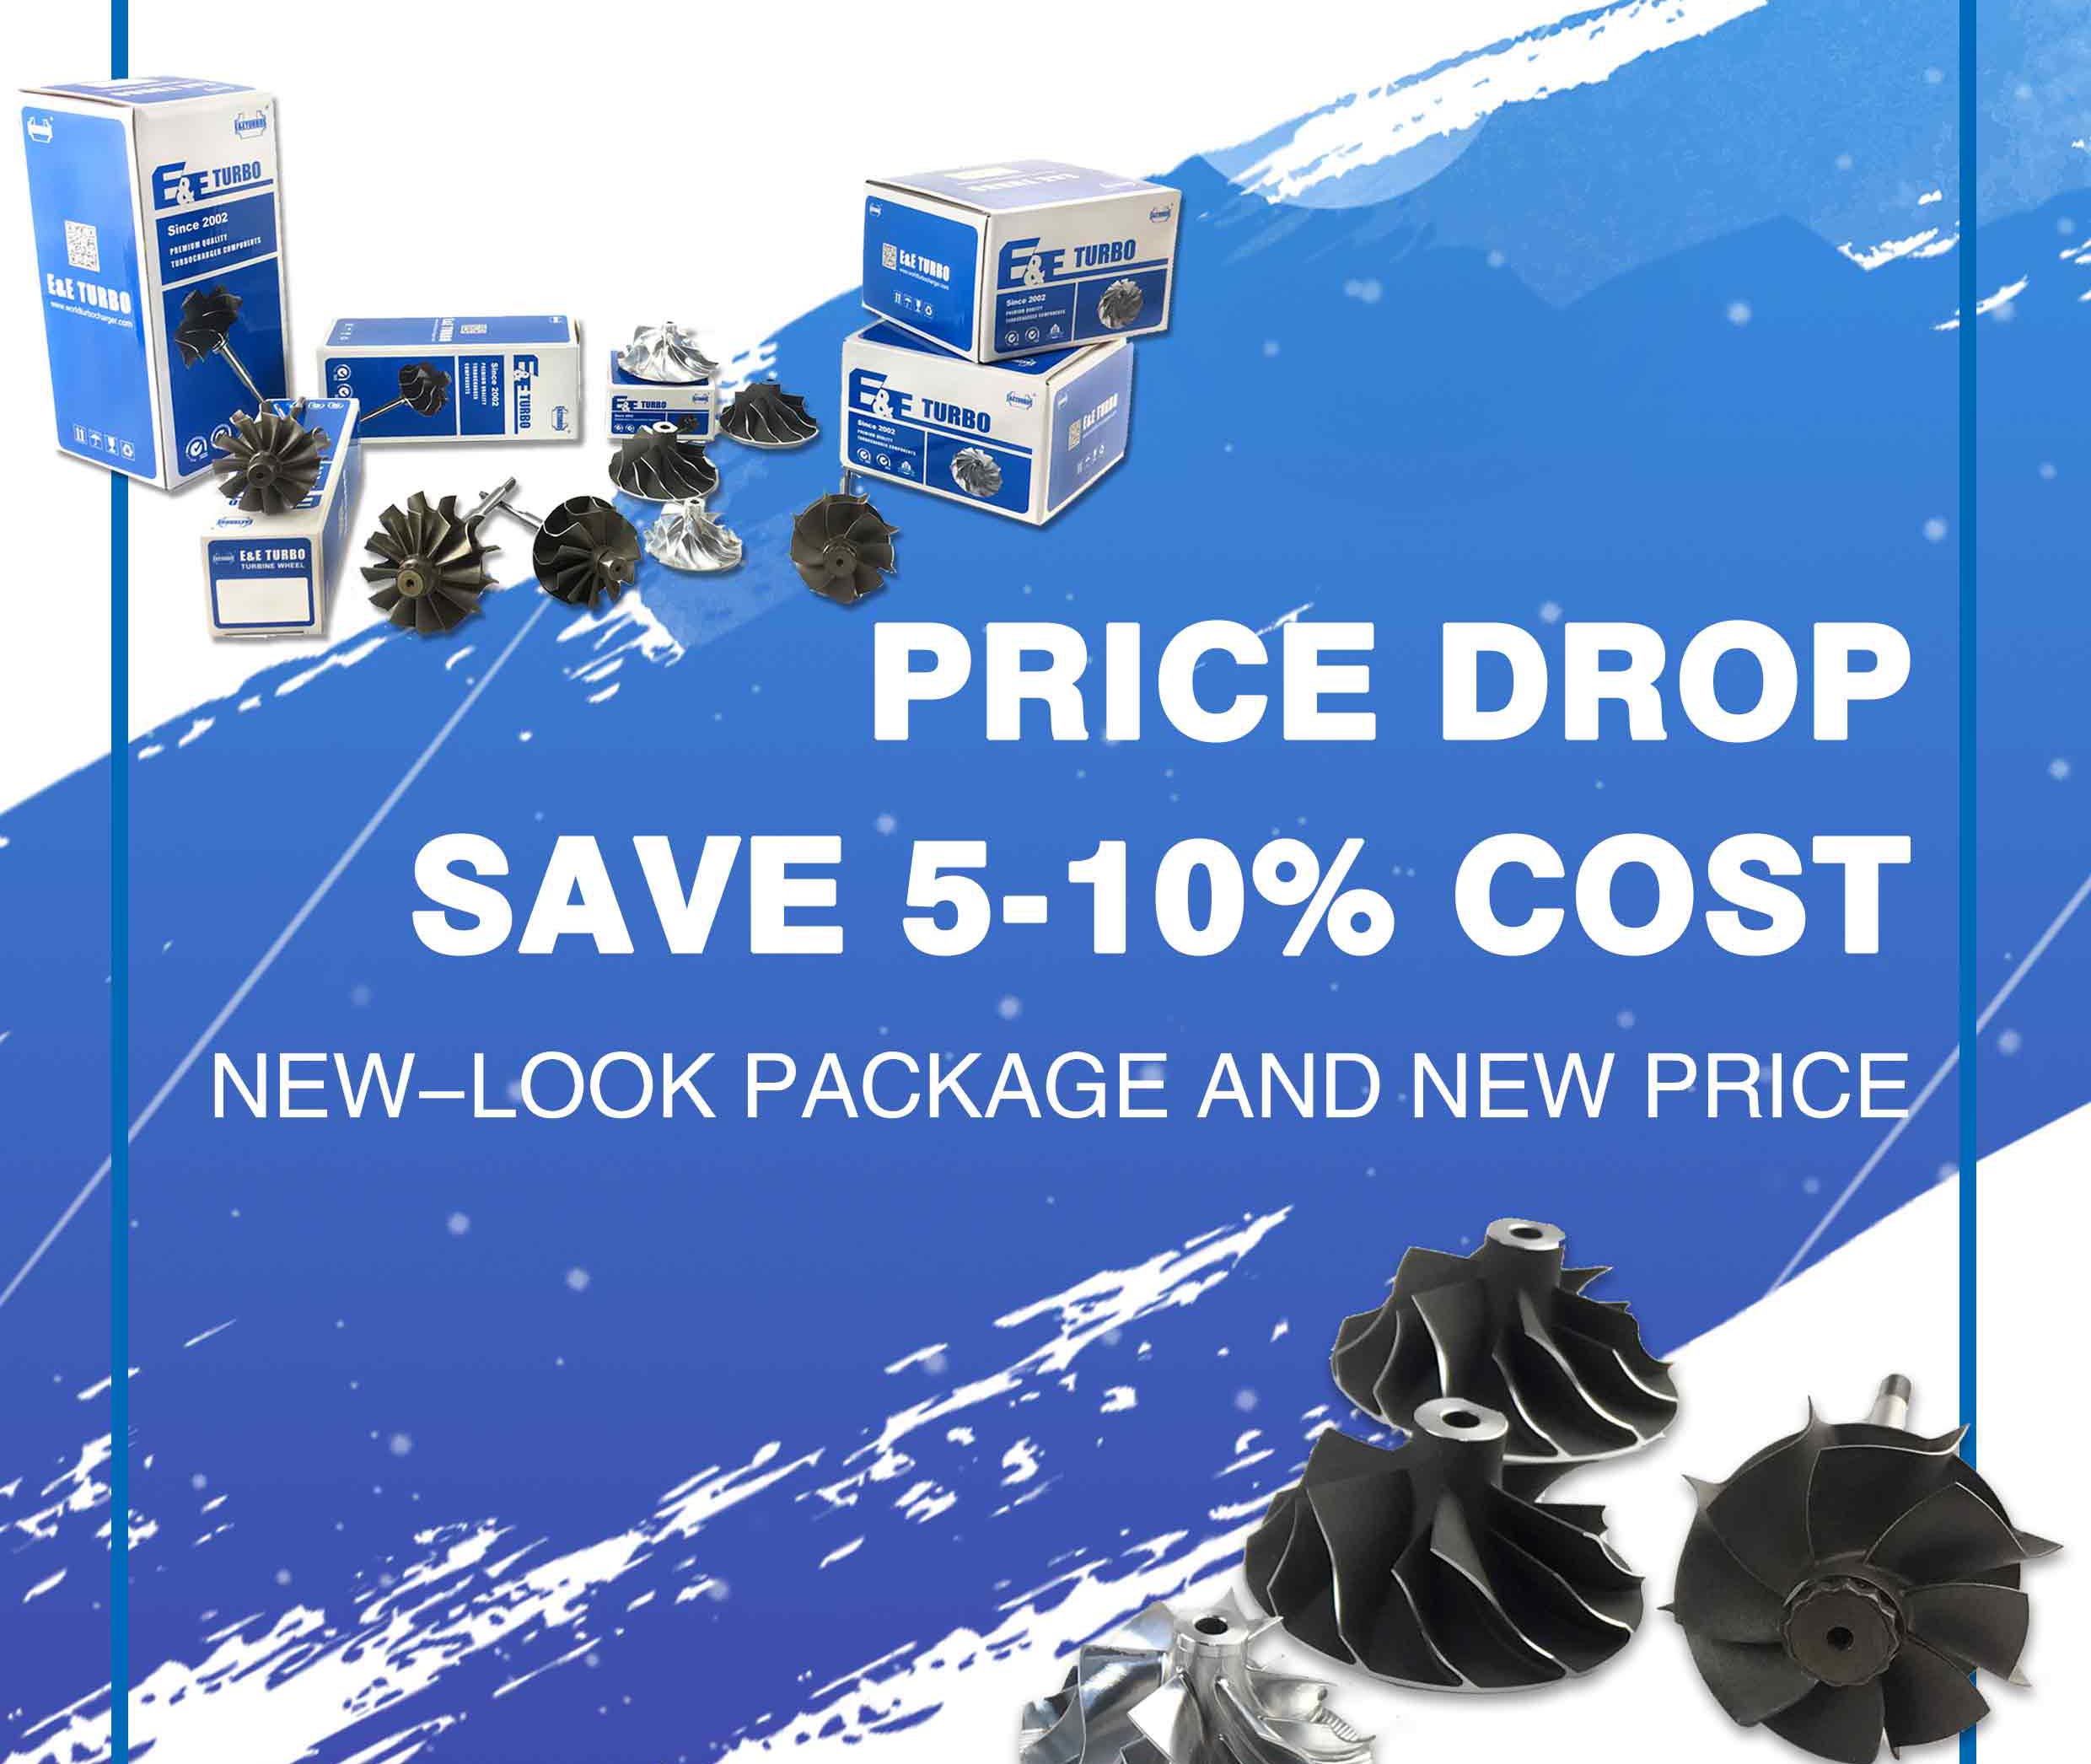 Price drop-new look package